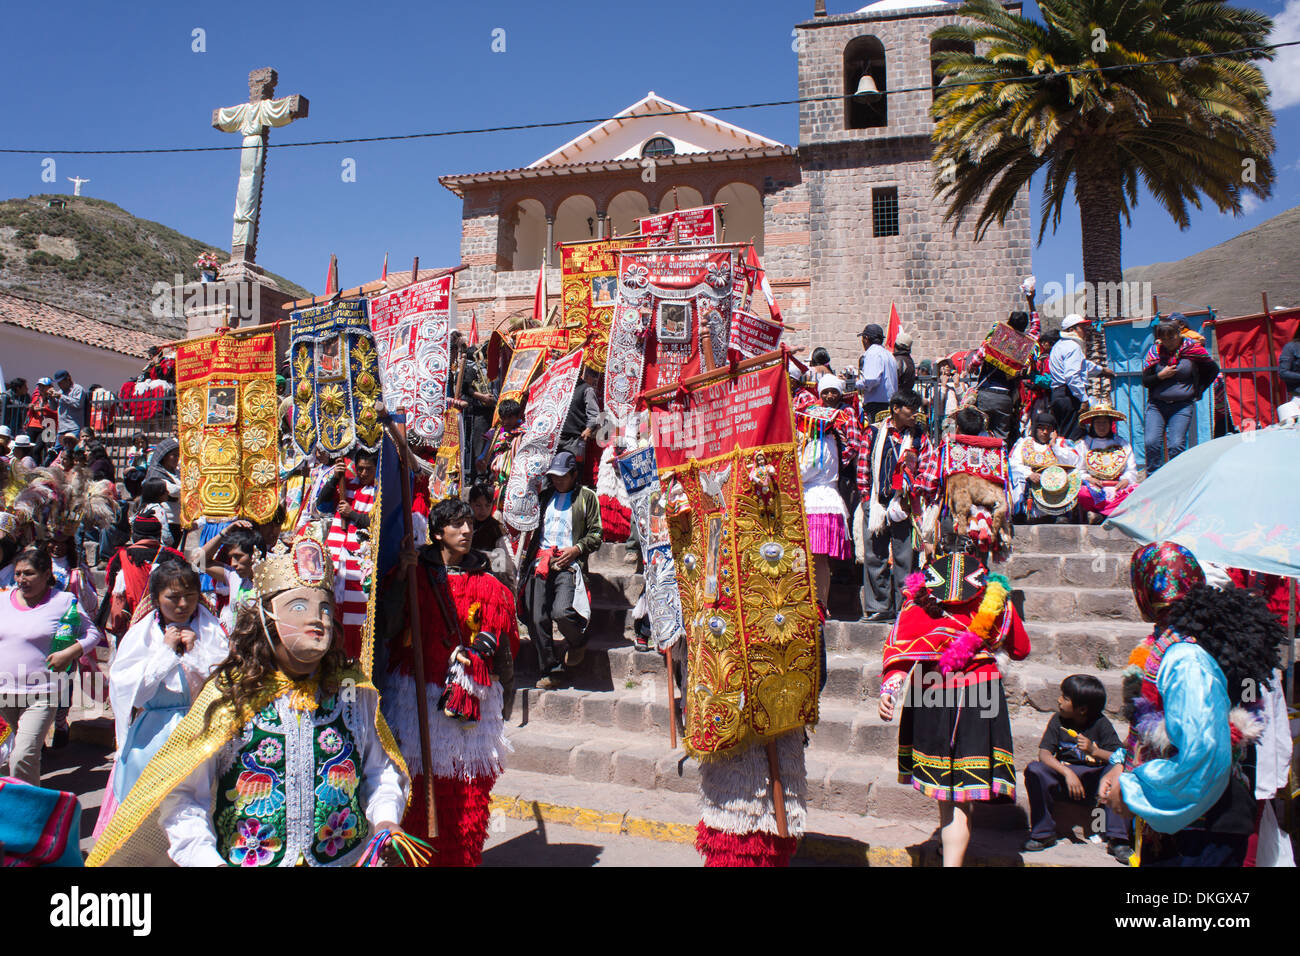 Religious festival in preparation for the Corpus Christi festival, Urcos, Peru, South America Stock Photo